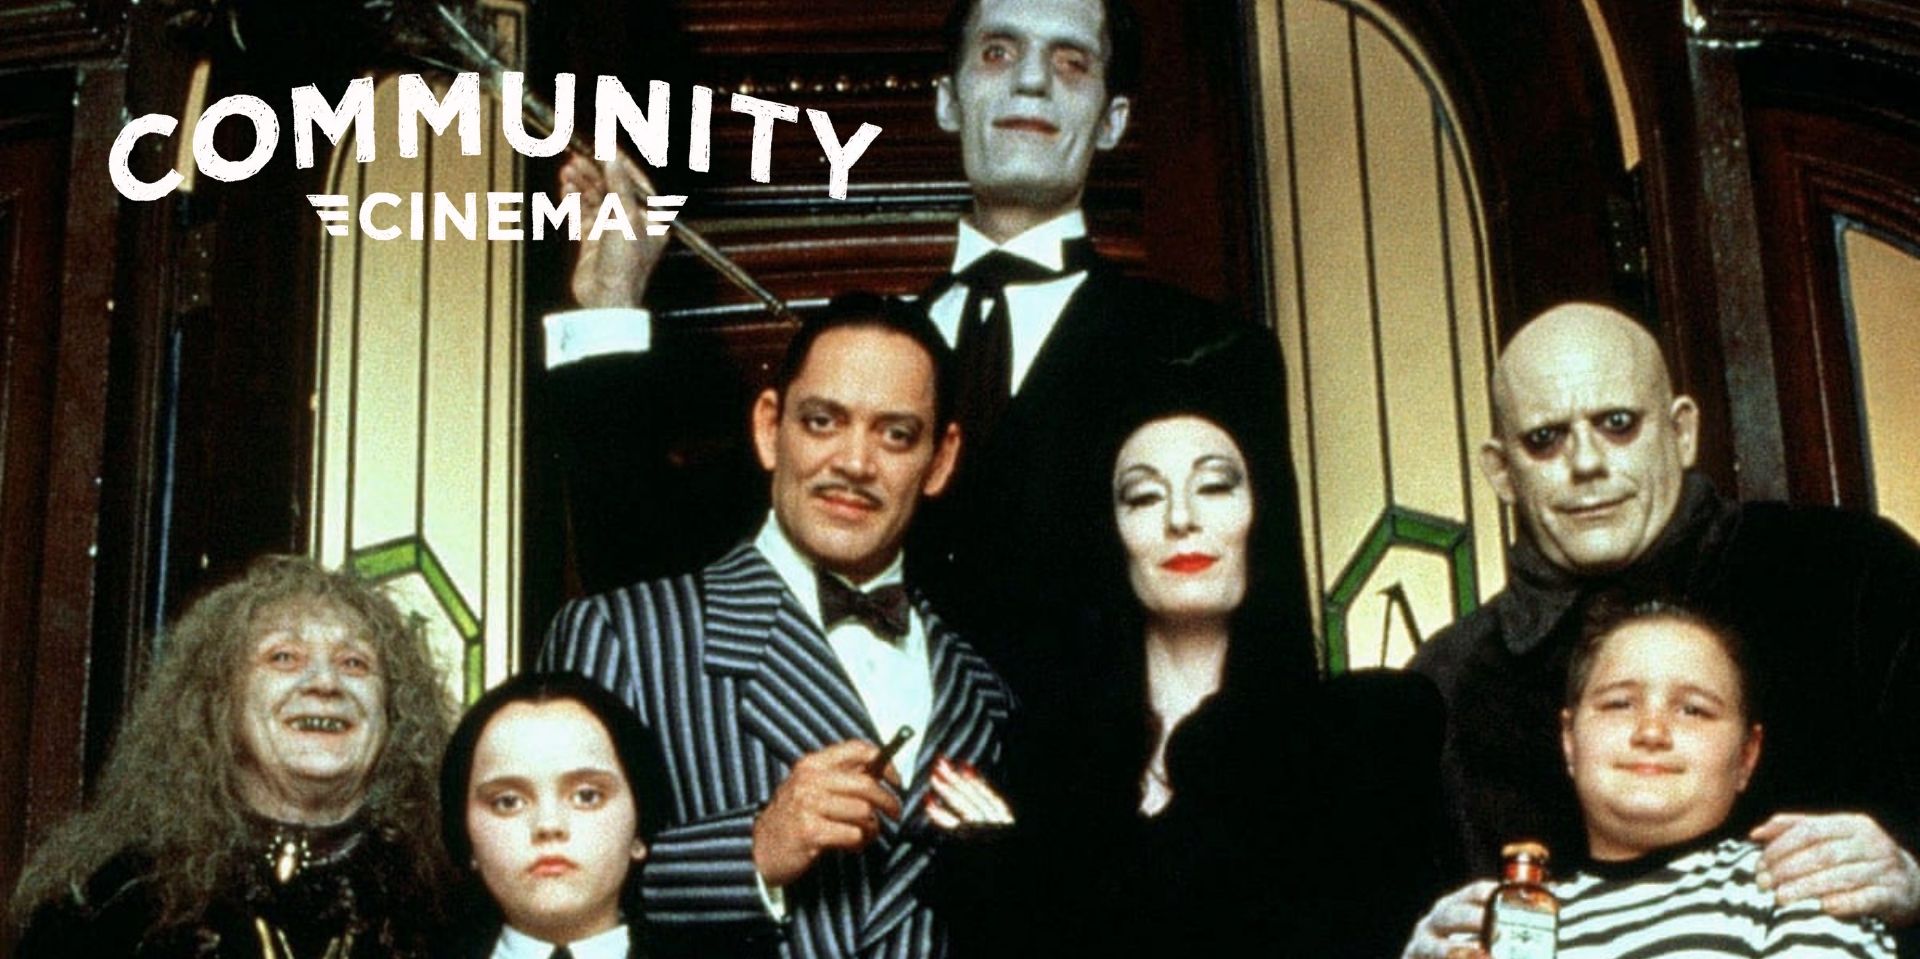 The Addams Family (1991) - Community Cinema & Amphitheater promotional image